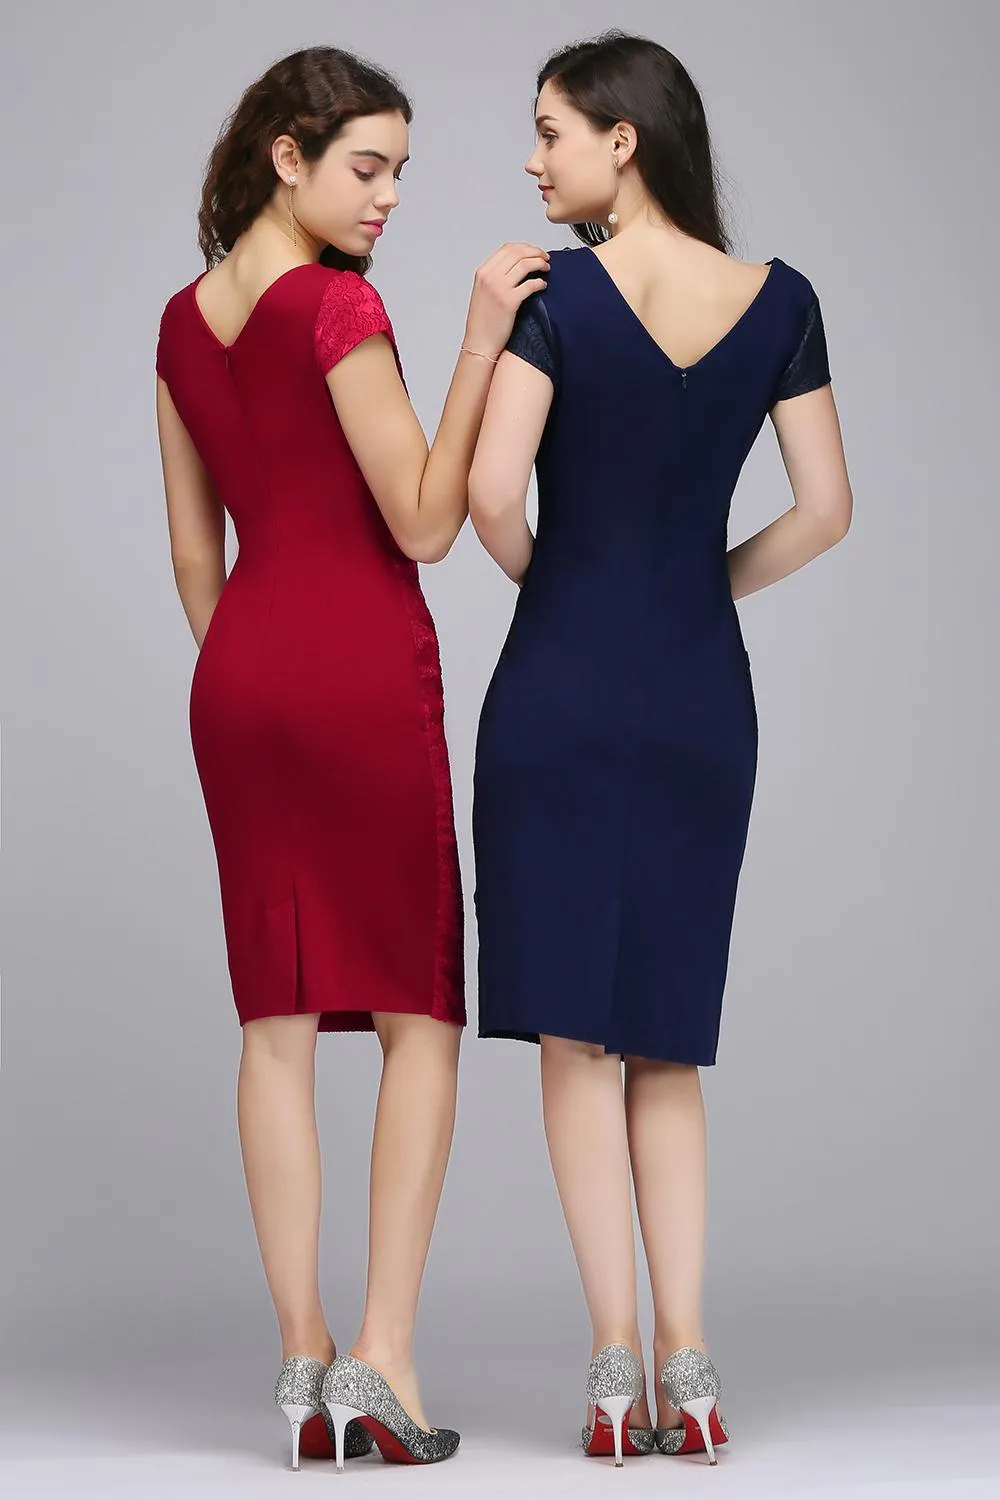 Elegant Sheath Vintage Dress 50s 60s Retro for Women Navy Red Floral Neck Bandage Midi Party Dresses FS1091 FS0009 FS0018 FS1393